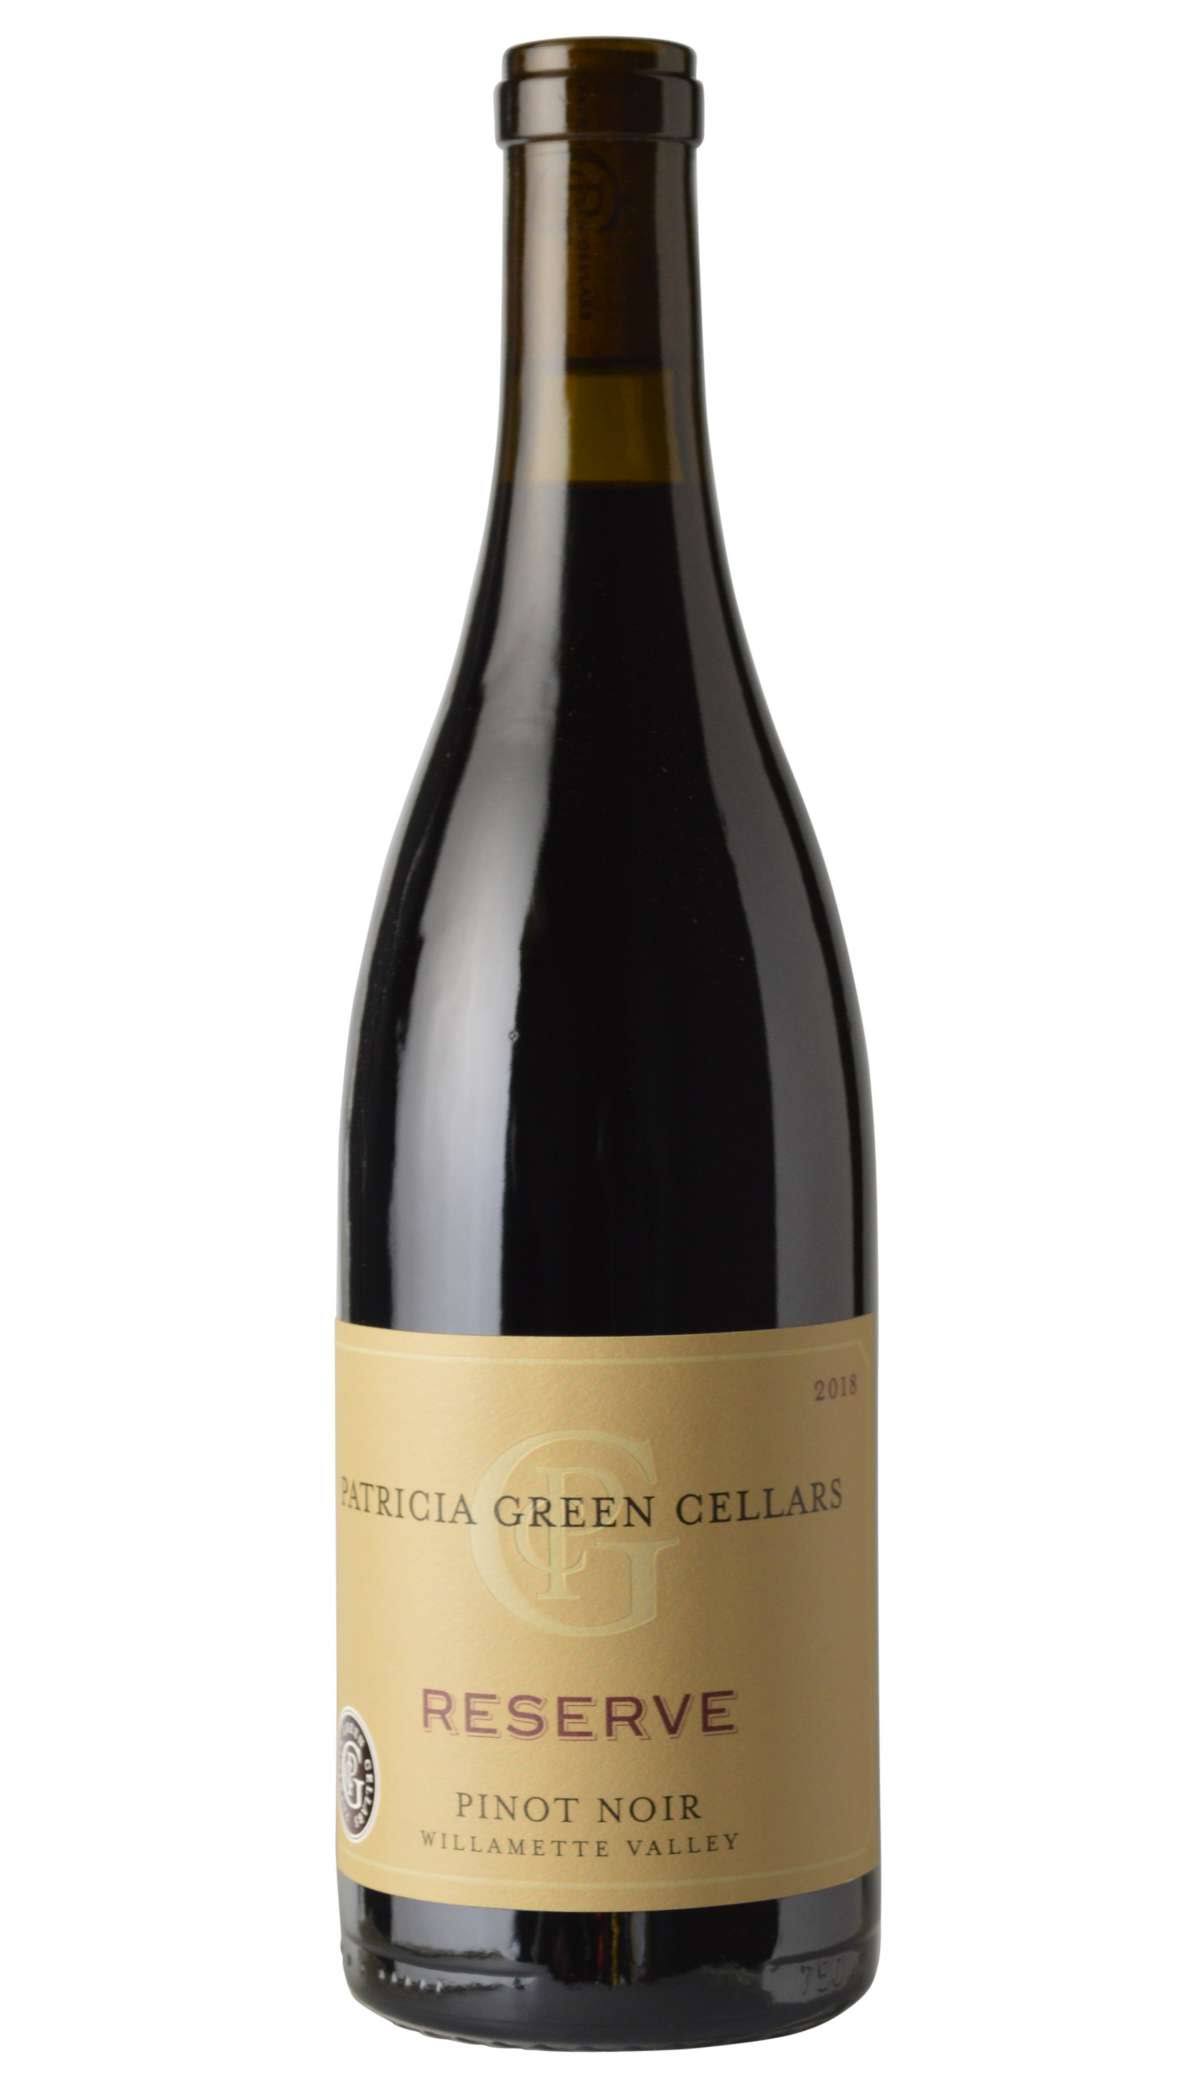 Patricia Green Cellars Pinot Noir Reserve